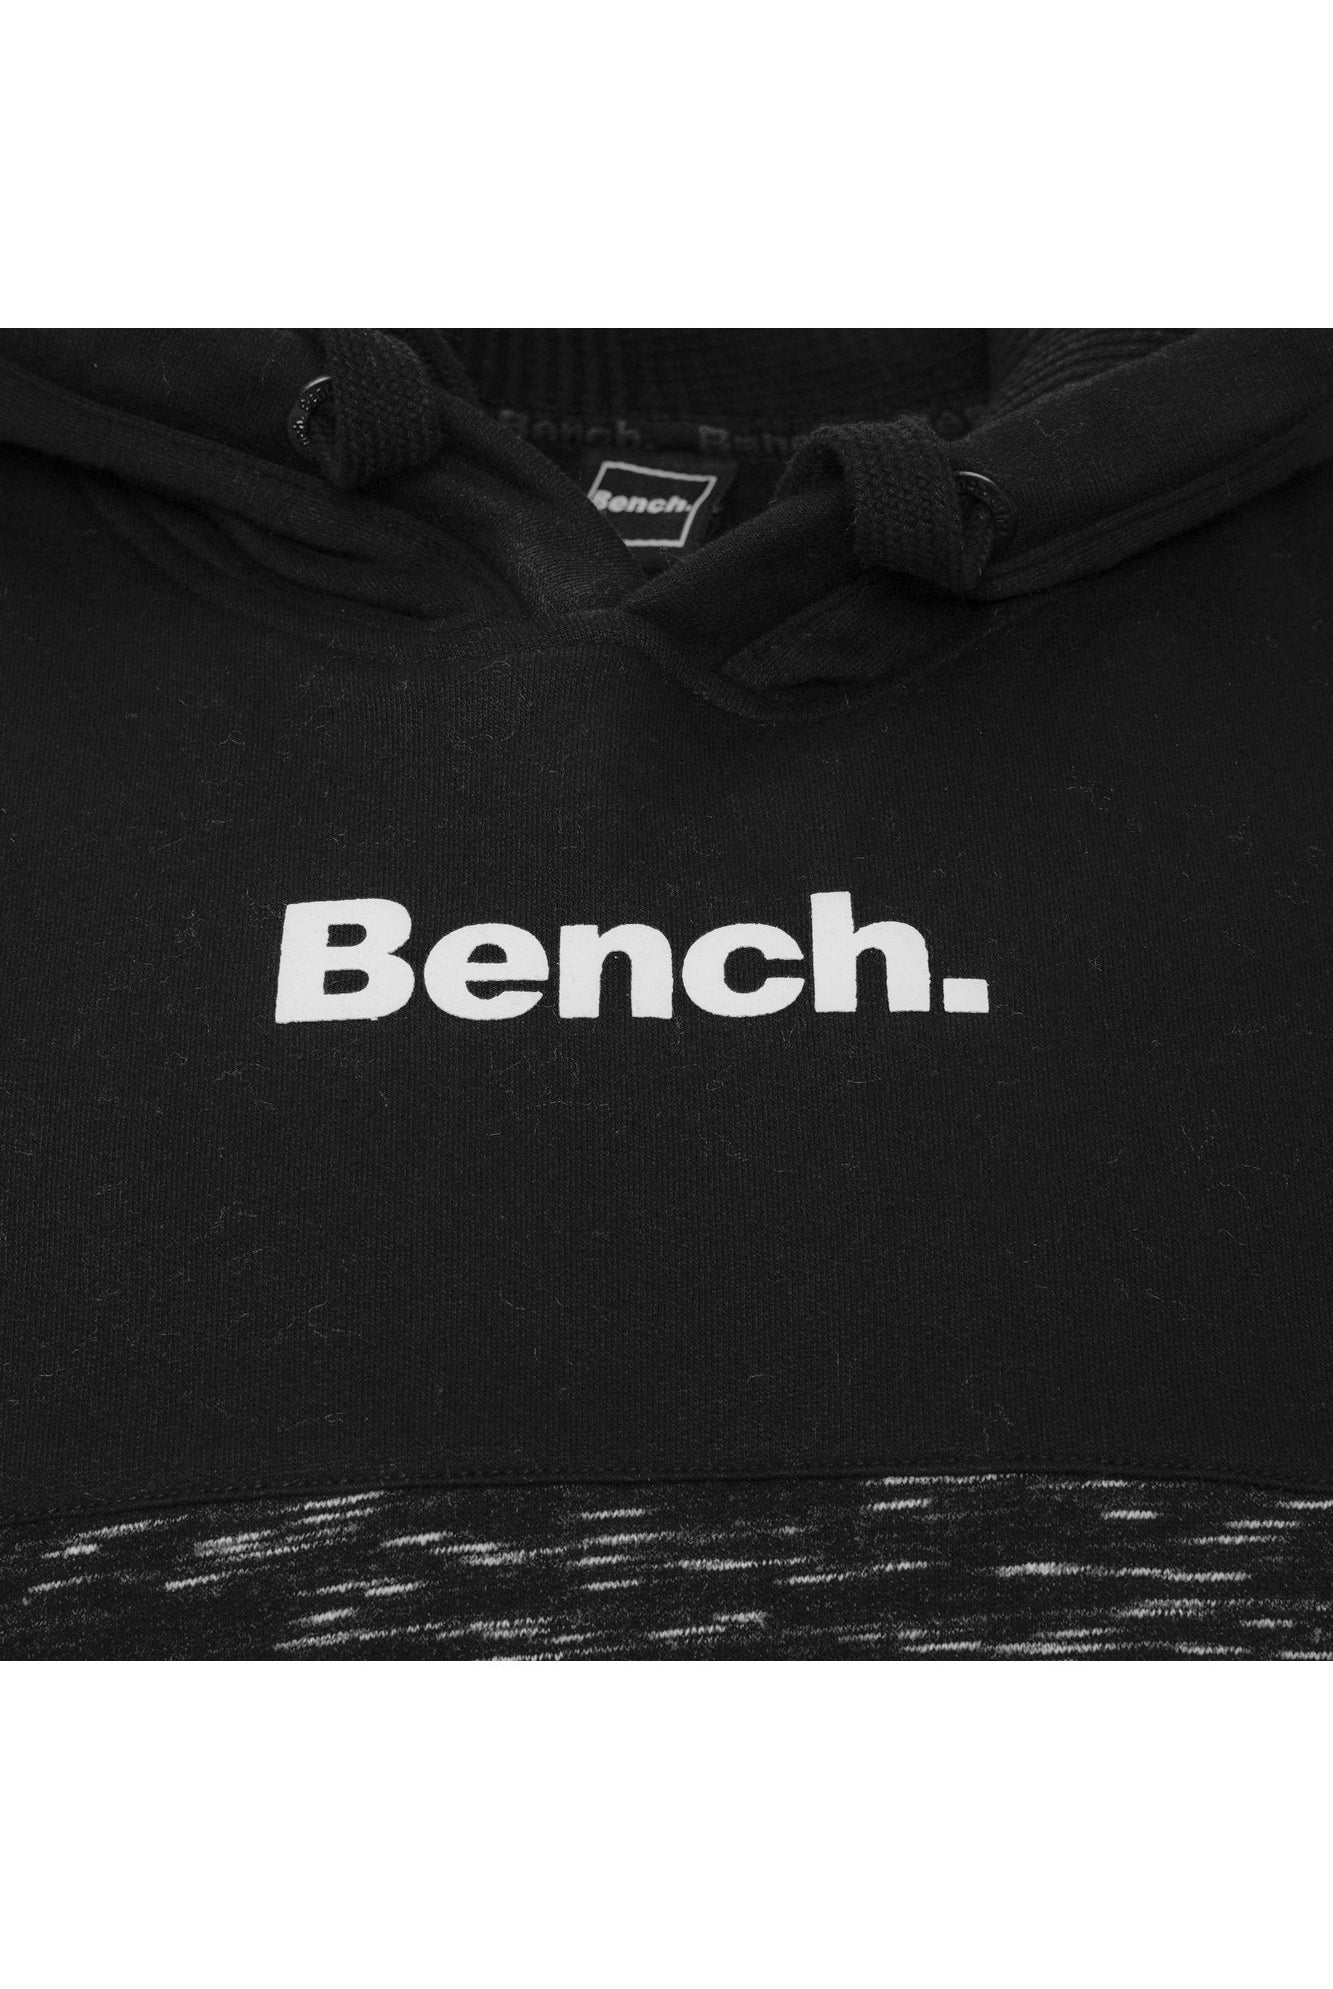 Mens 'CABALLO' Crew Sweat - BLACK - Shop at www.Bench.co.uk #LoveMyHood